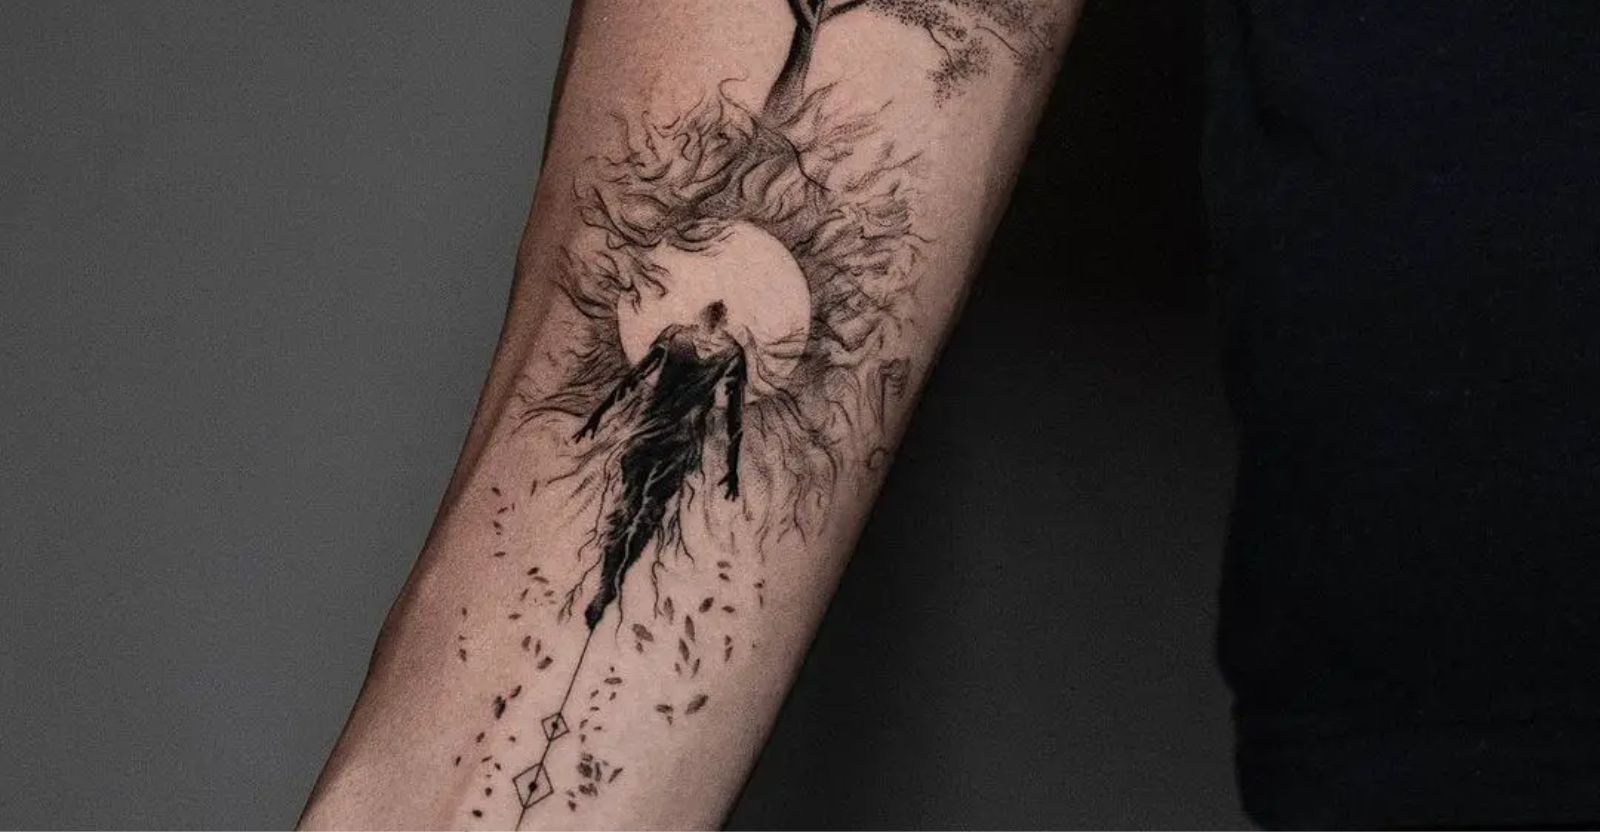 Tattoo tagged with: camping, tree, small, svenrayen, inner arm, tiny,  travel, pine tree, ifttt, little, nature, illustrative | inked-app.com